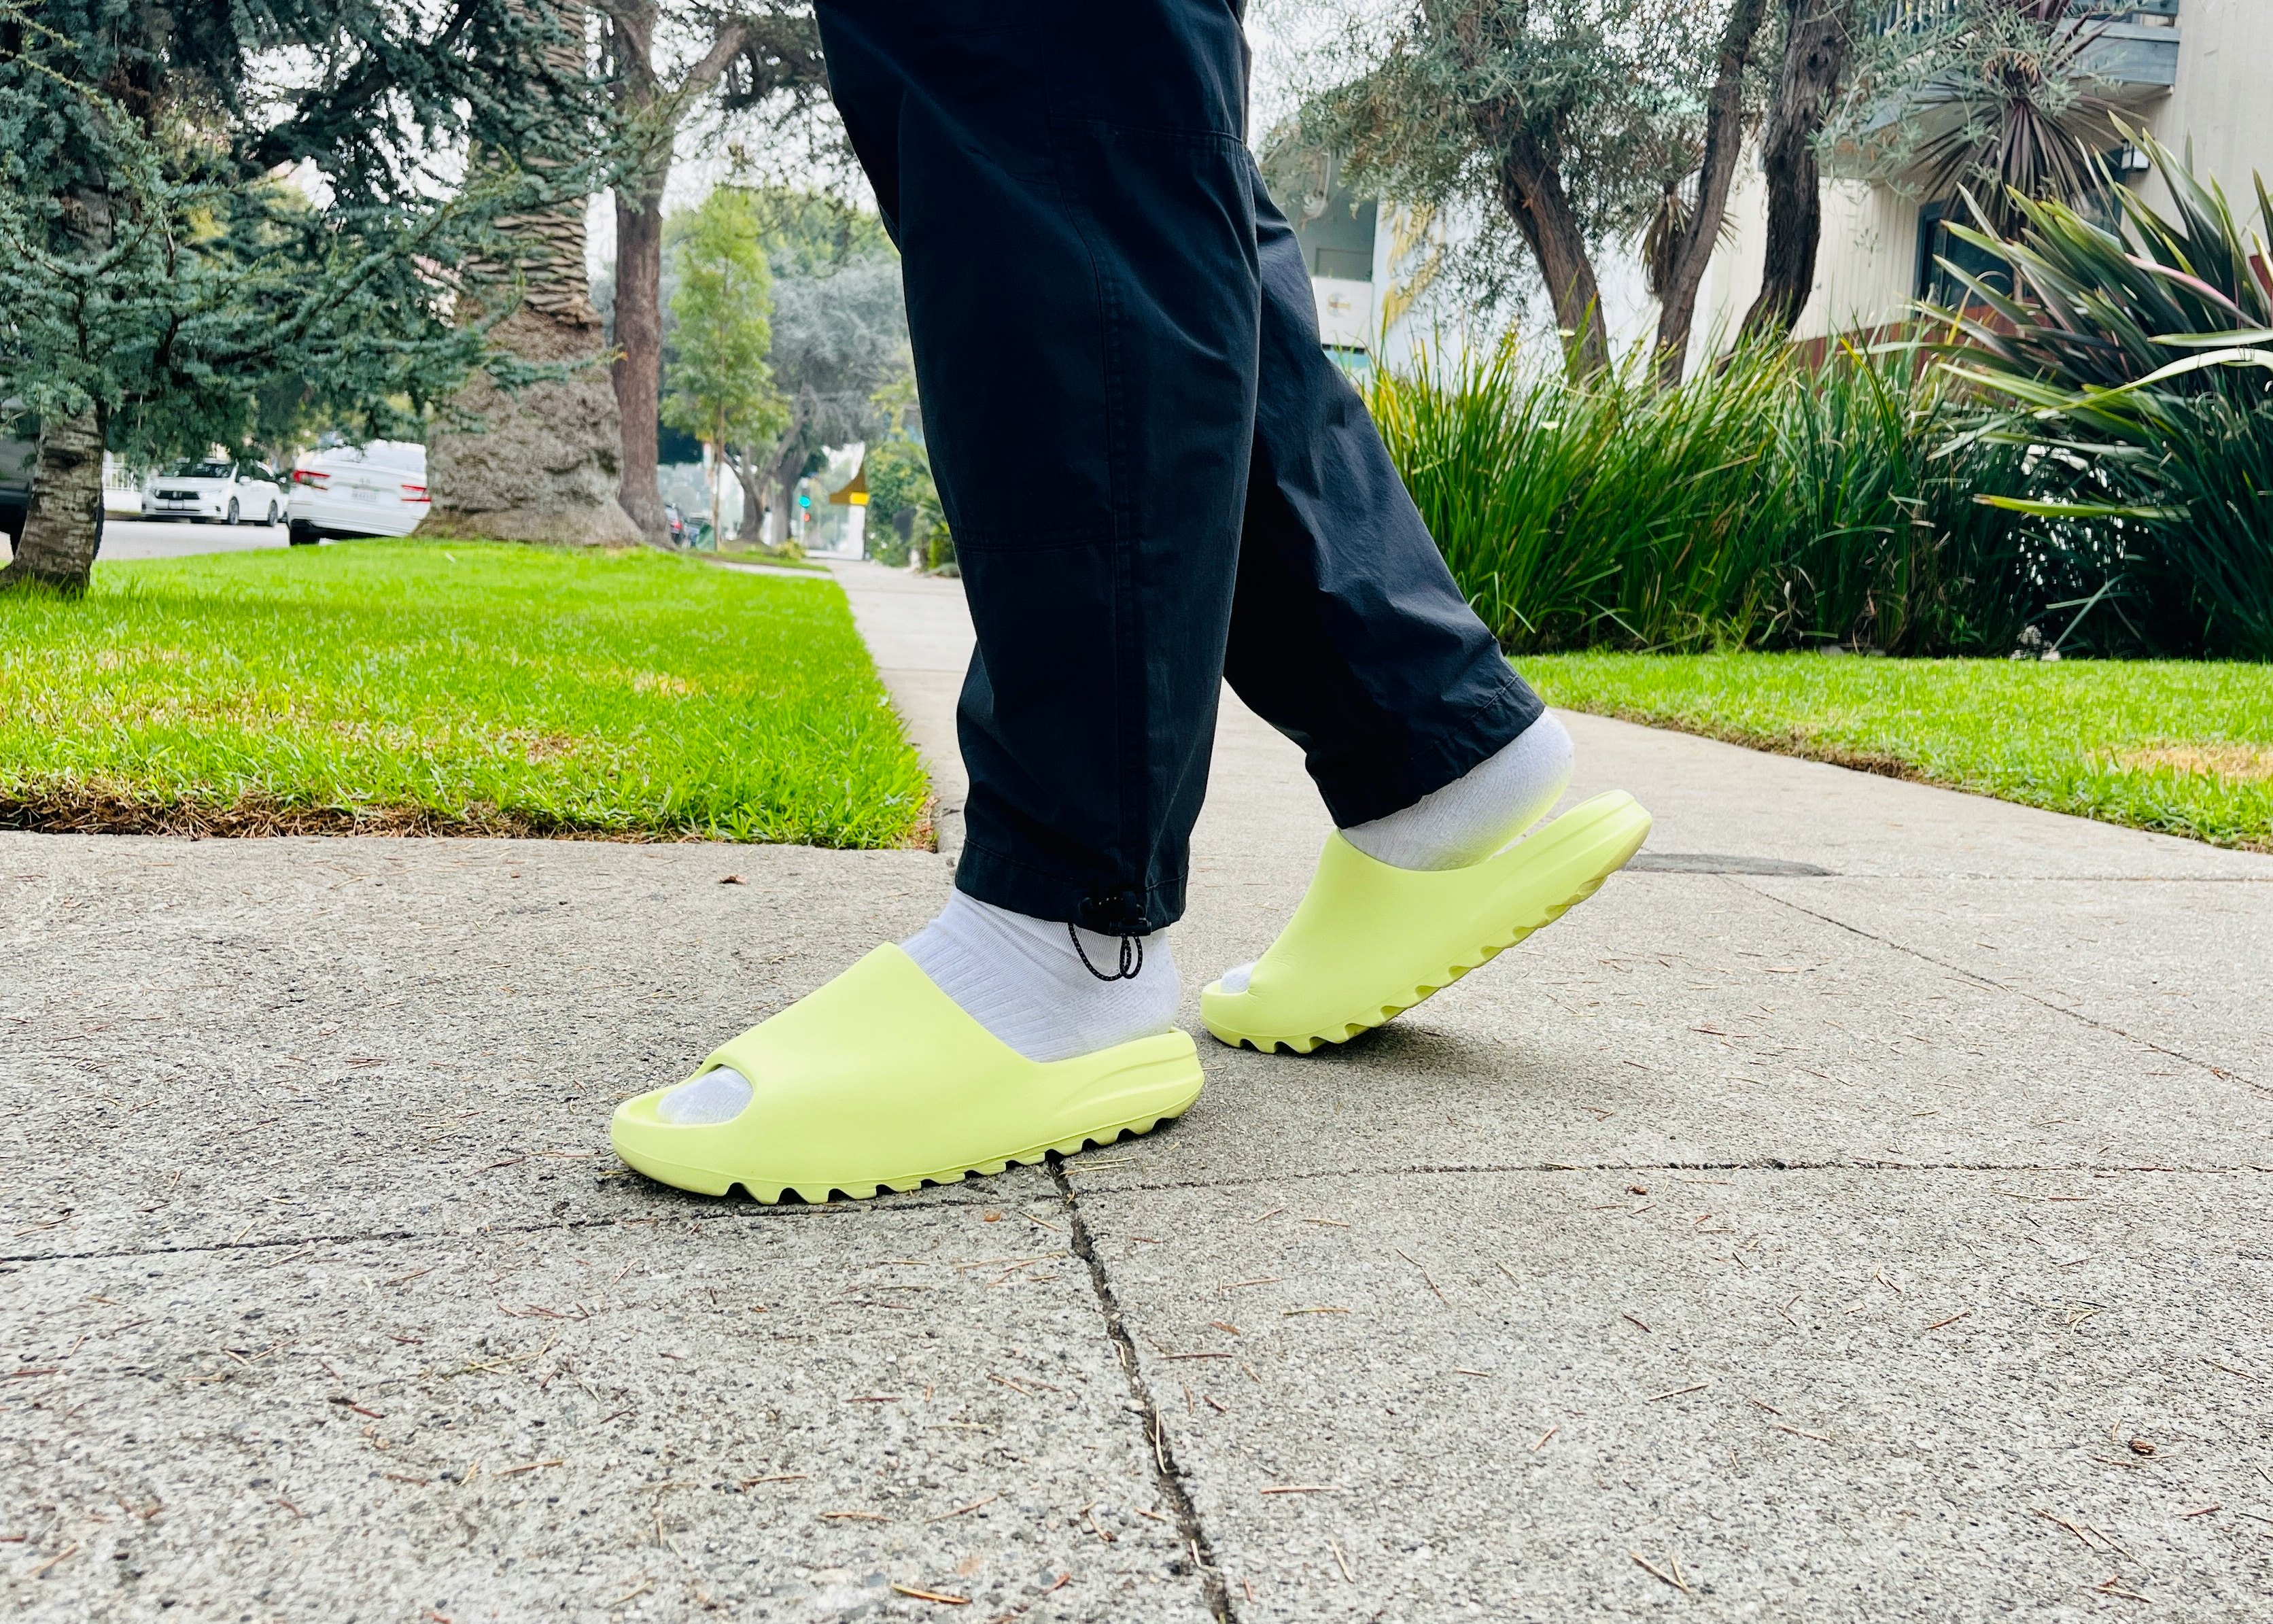 green yeezy slides on feet